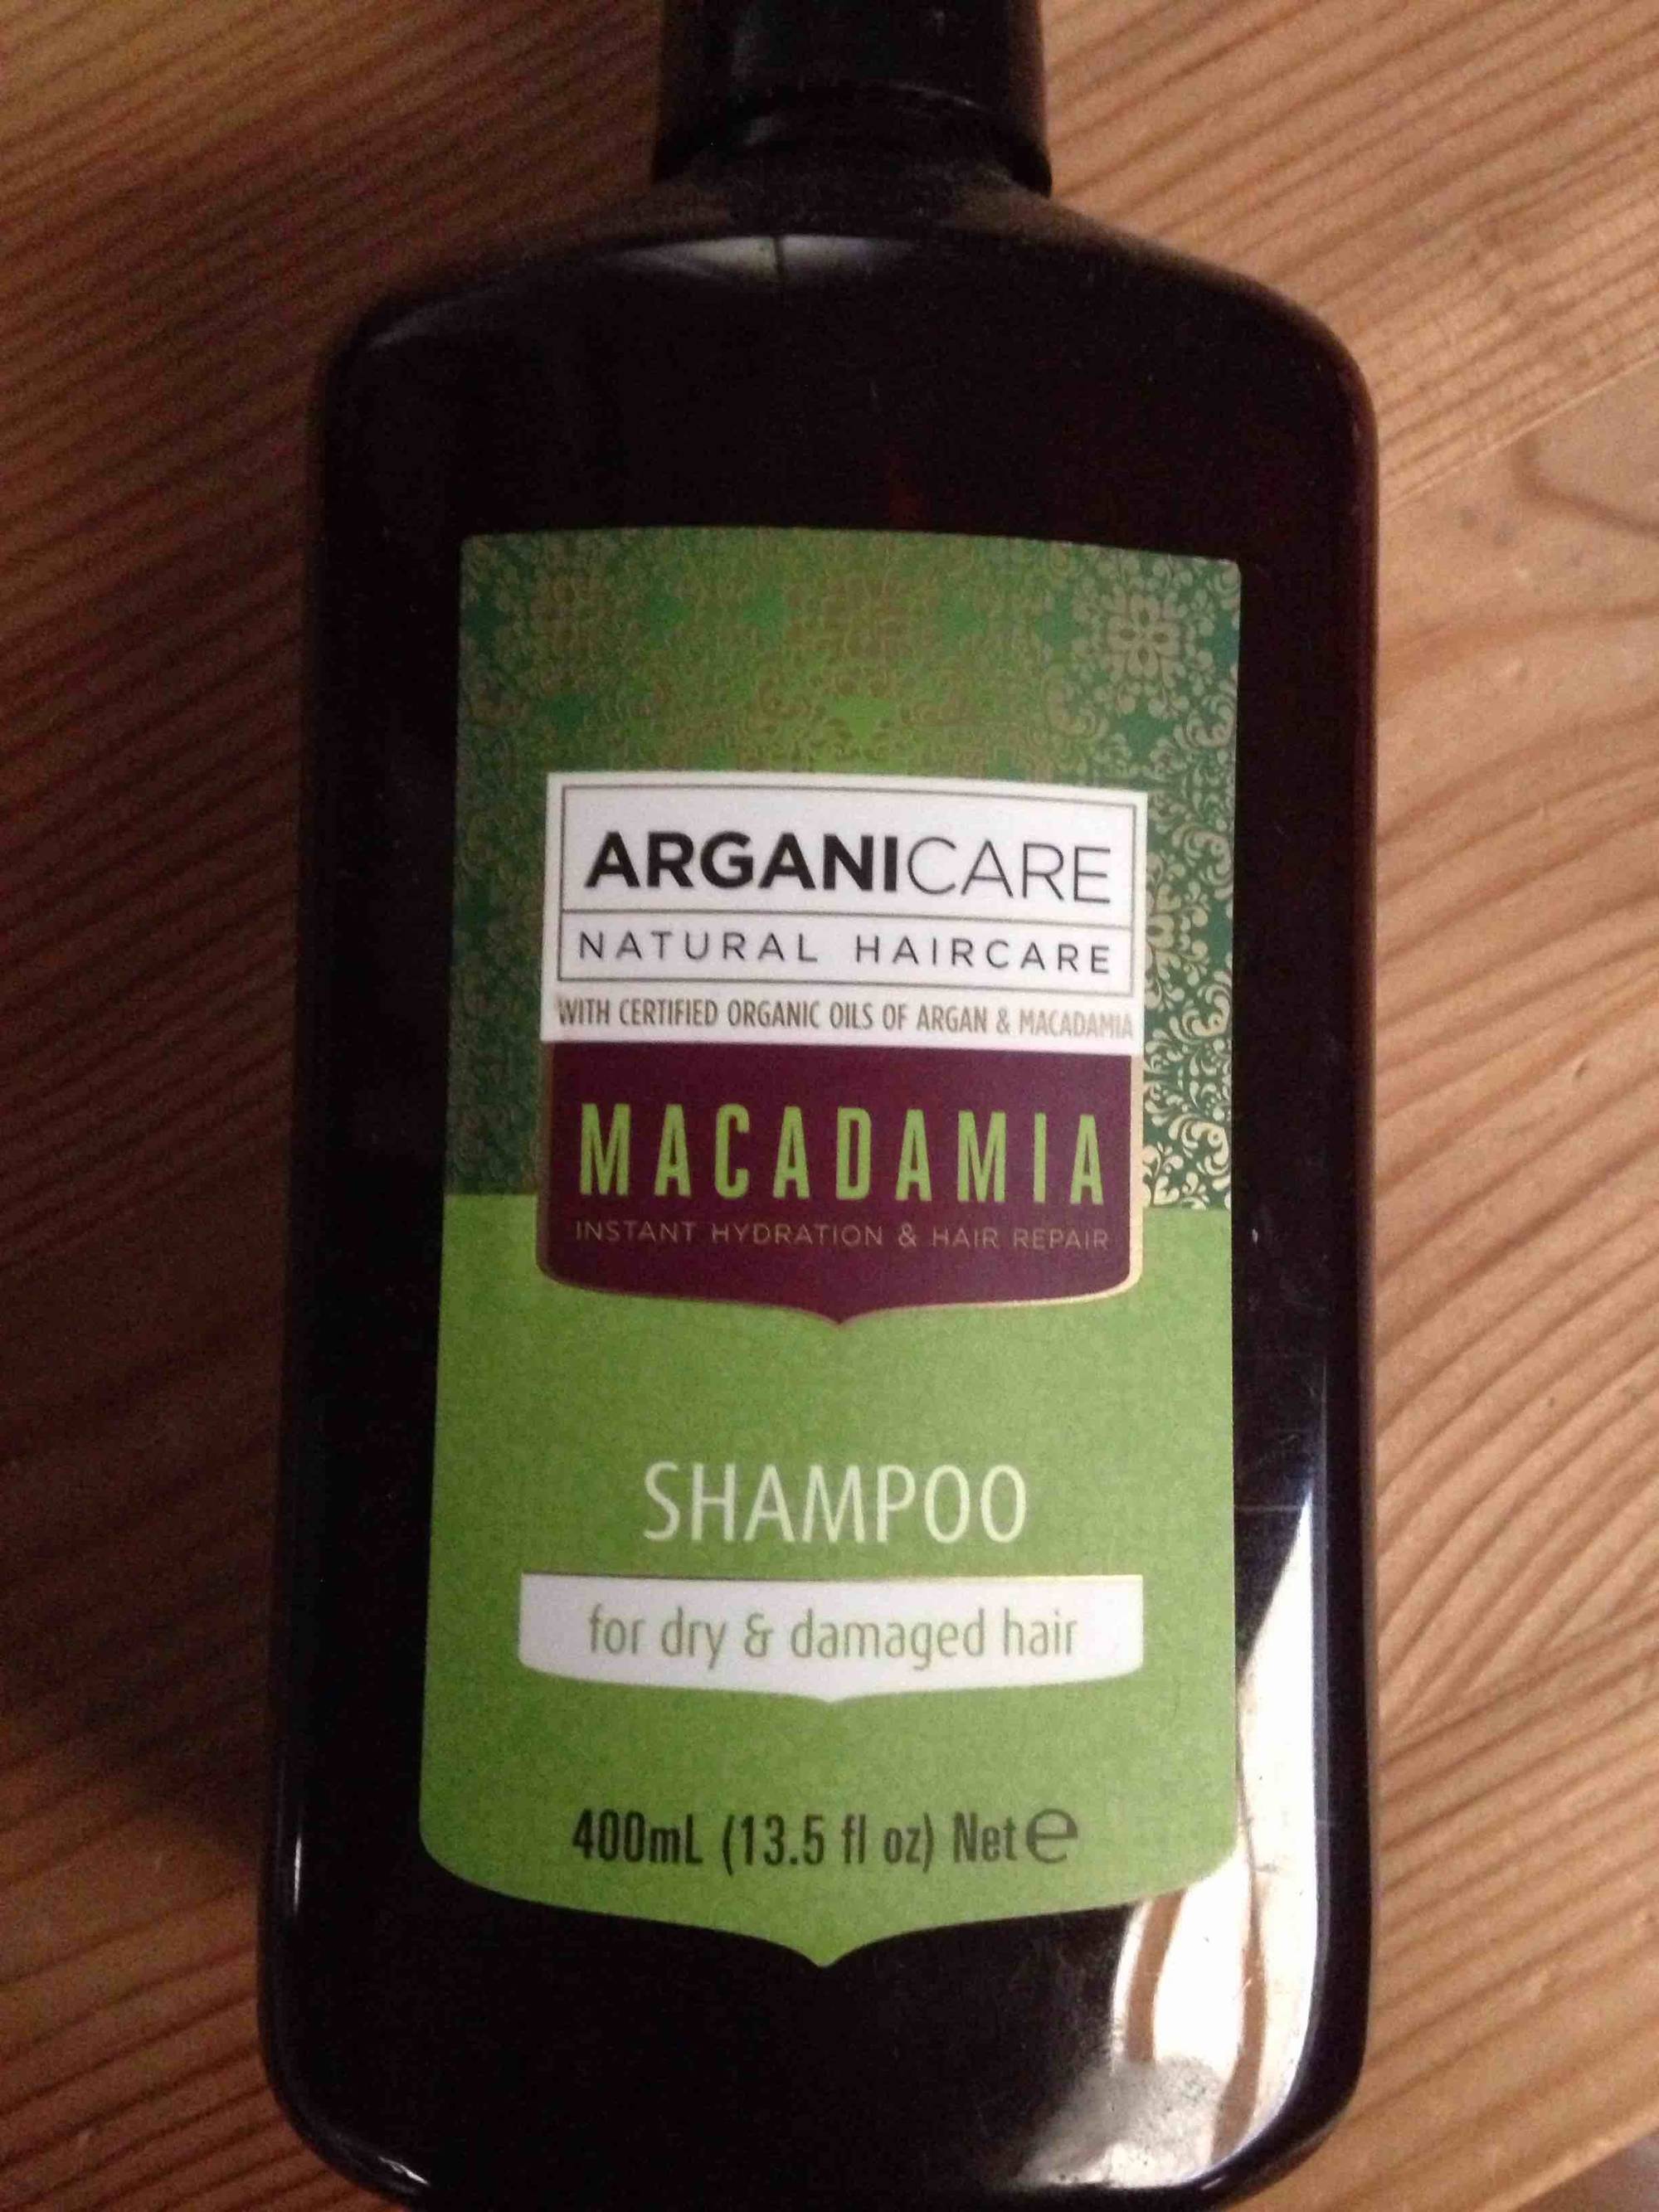 ARGANICARE - Macadamia - Shampoo for dry & damaged hair